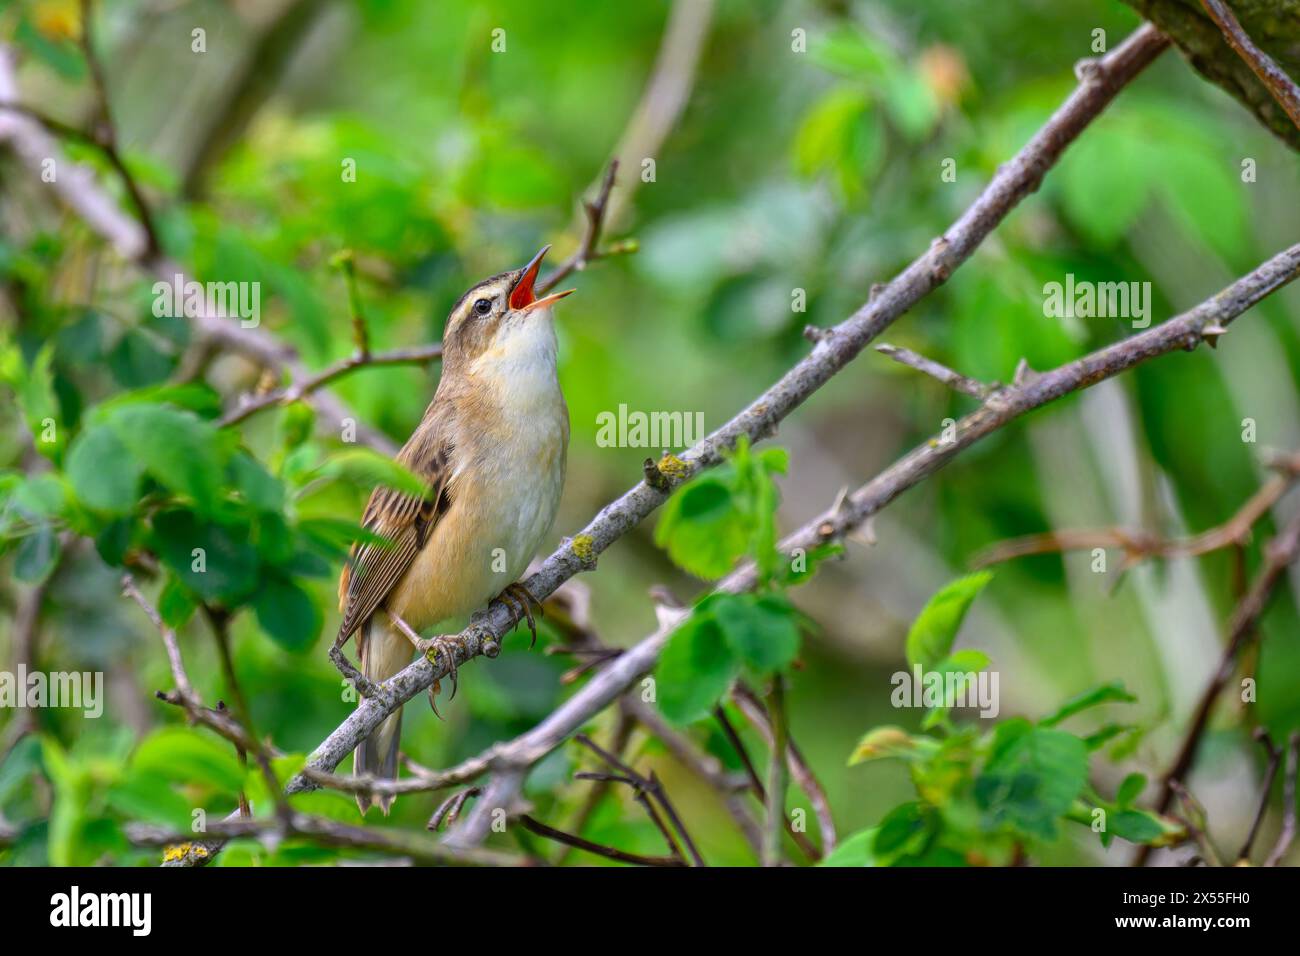 Sedge warbler, Acrocephalus schoenobaenus, perched in a tree, singing Stock Photo